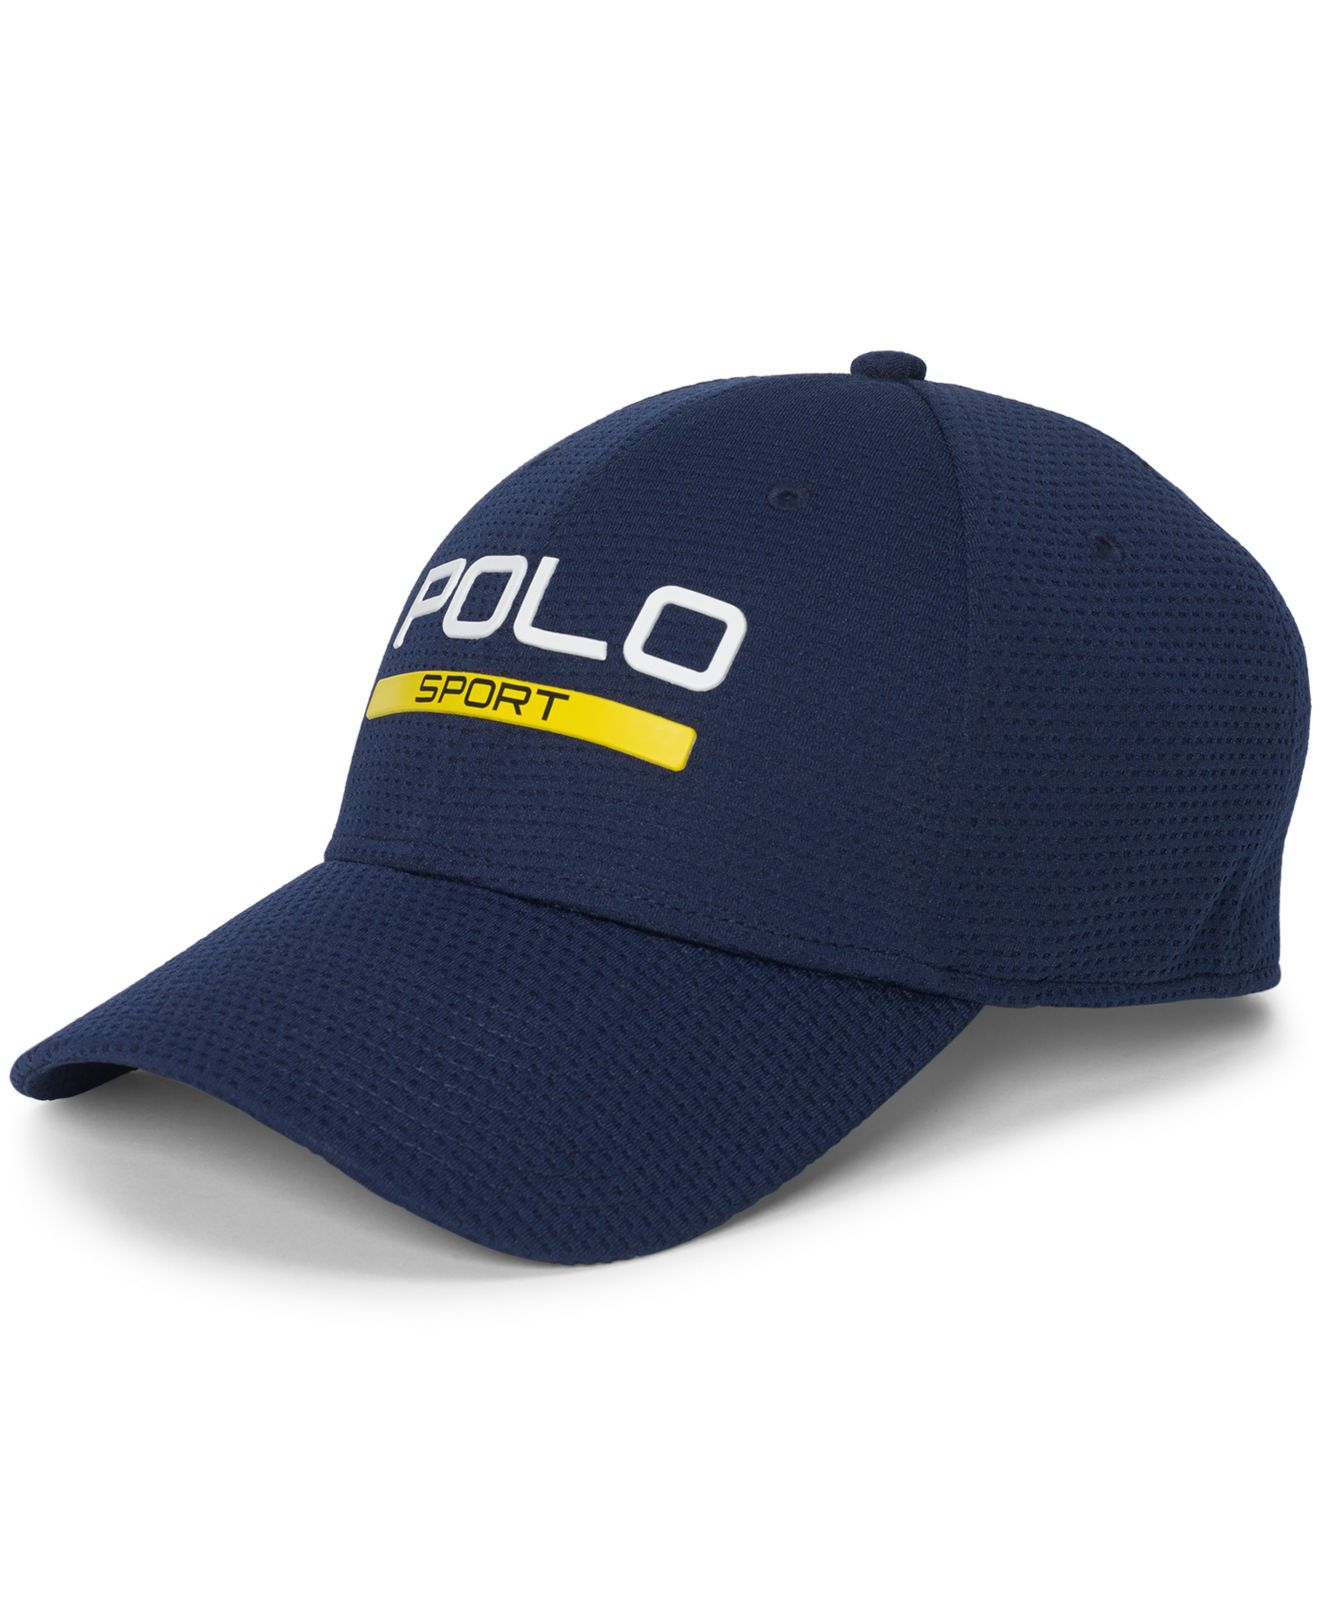 Lyst - Polo Ralph Lauren Polo Sport Men's Stretch-fit Performance Hat